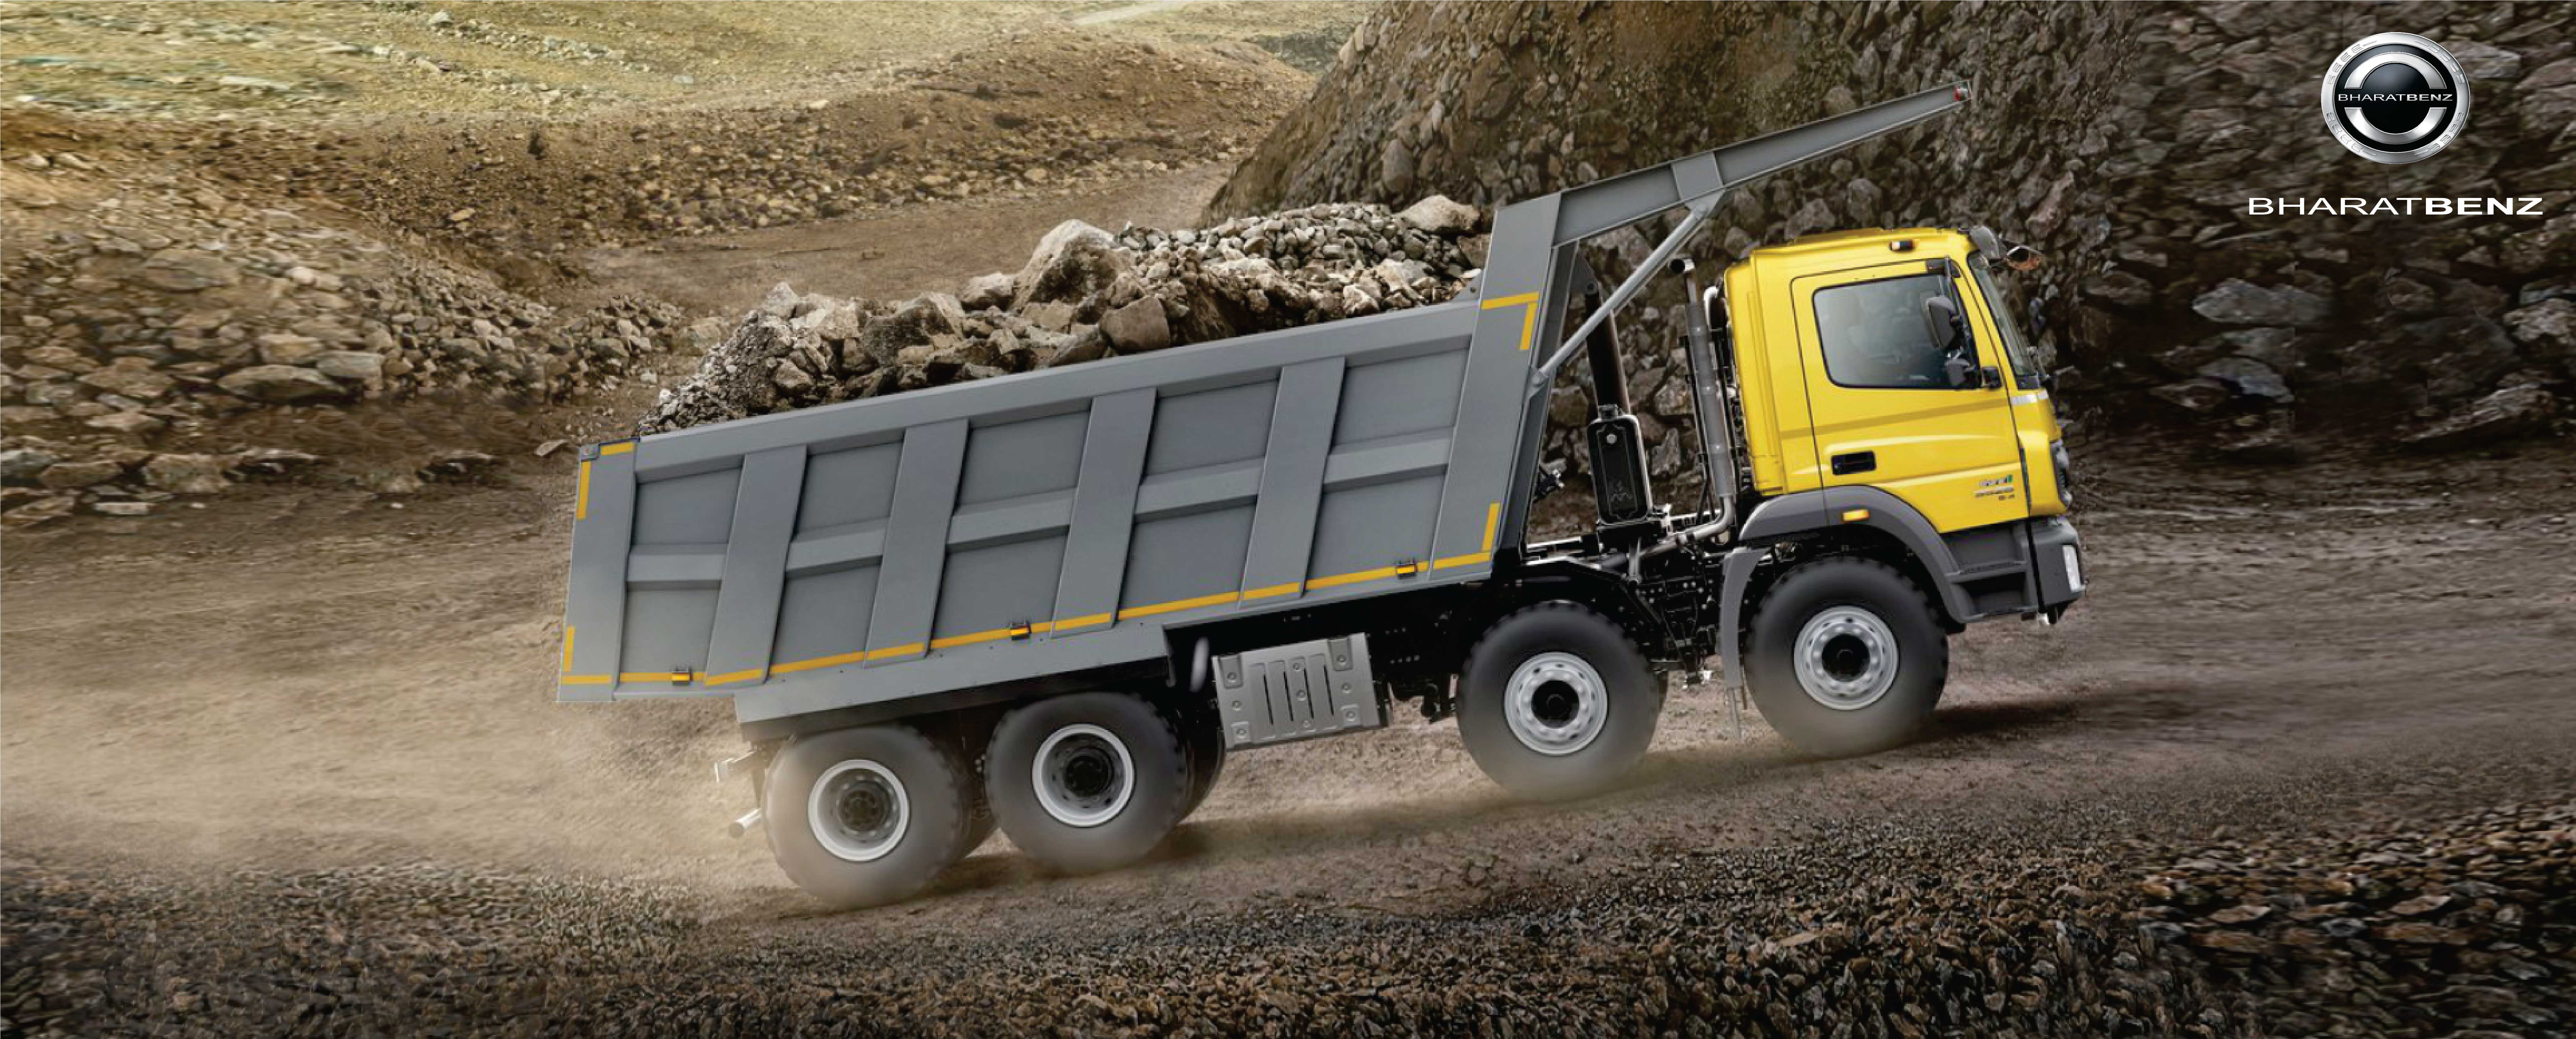 Bharat Benz Mining Trucks-Daimler